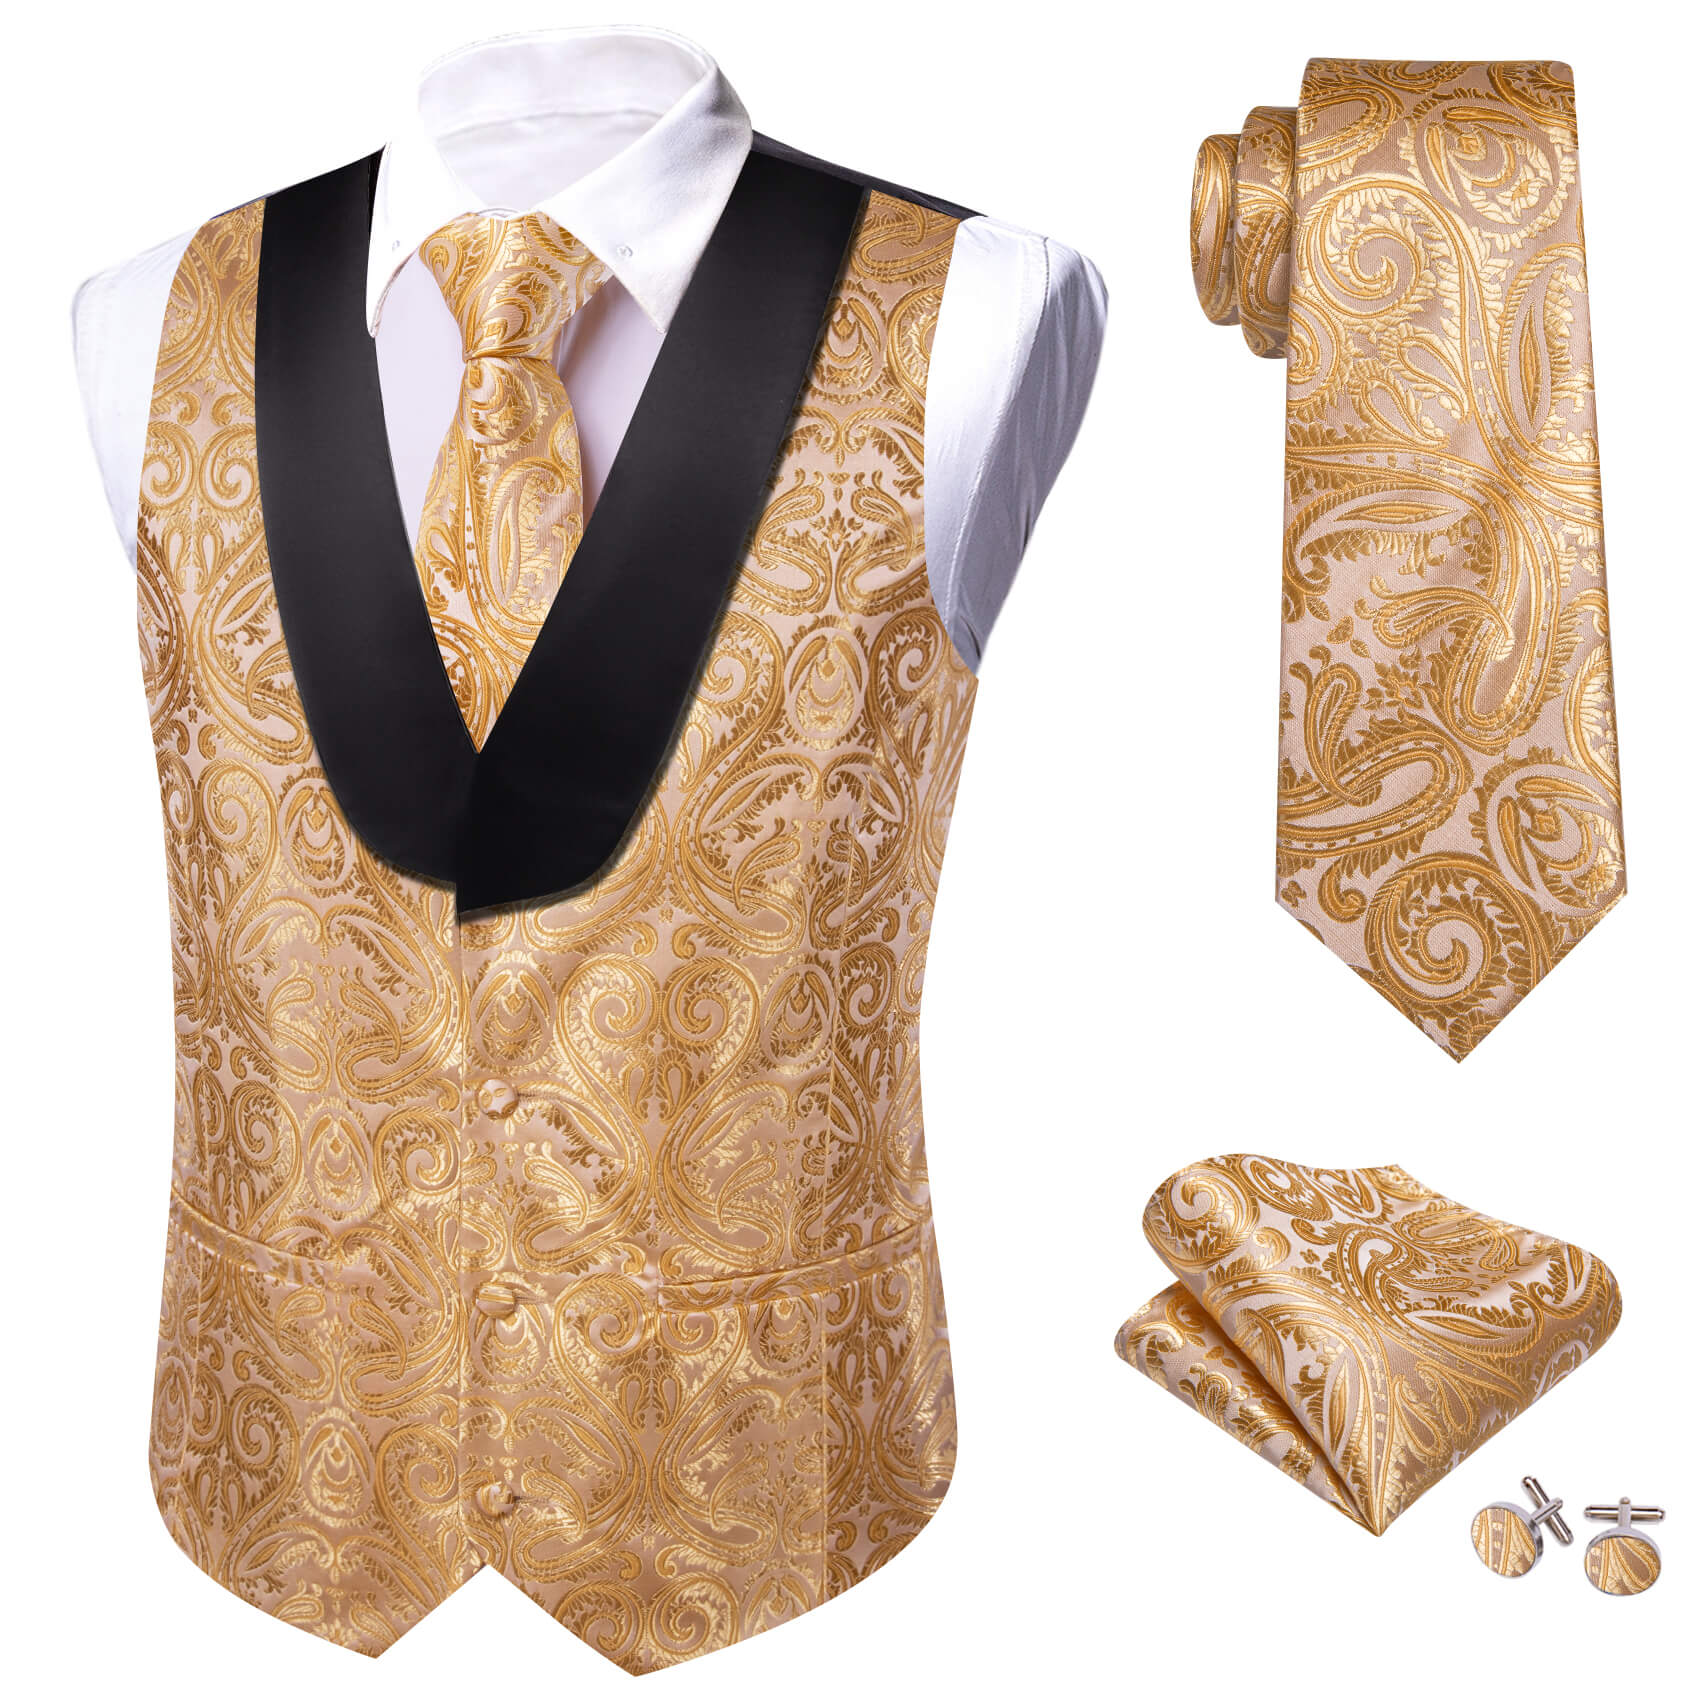 Barry.wang Shawl Collar Vest BurlyWood Brown Paisley Silk Men's Vest Tie Set New Arrival